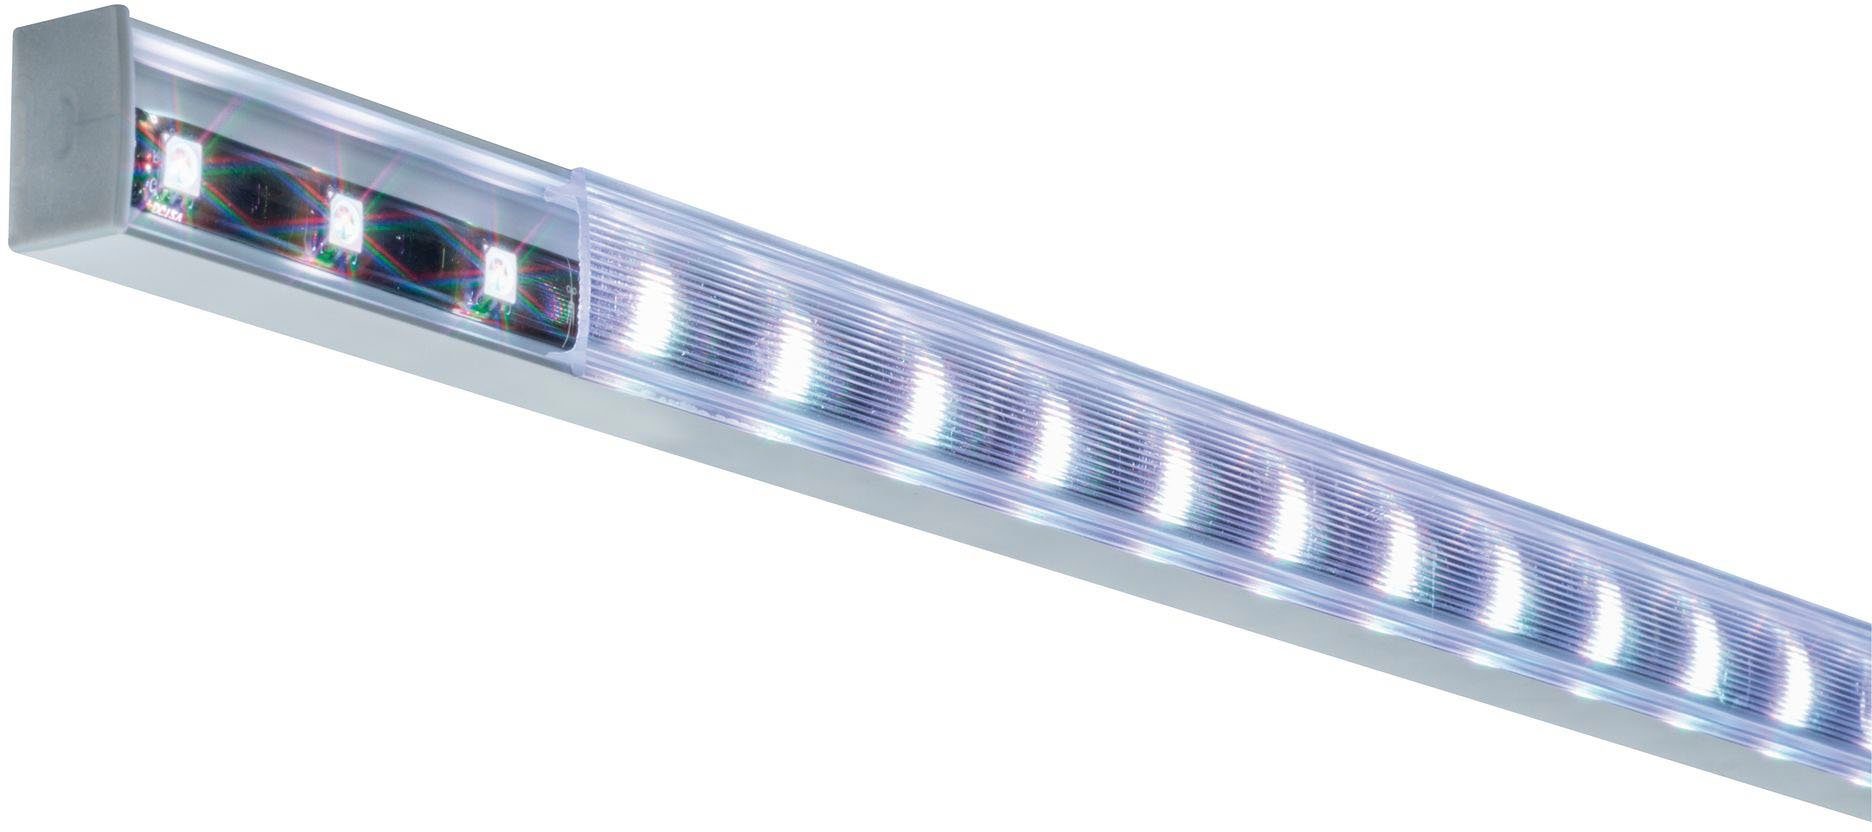 Paulmann Alu eloxiert mit Diffusor Profil 1m LED-Streifen Square